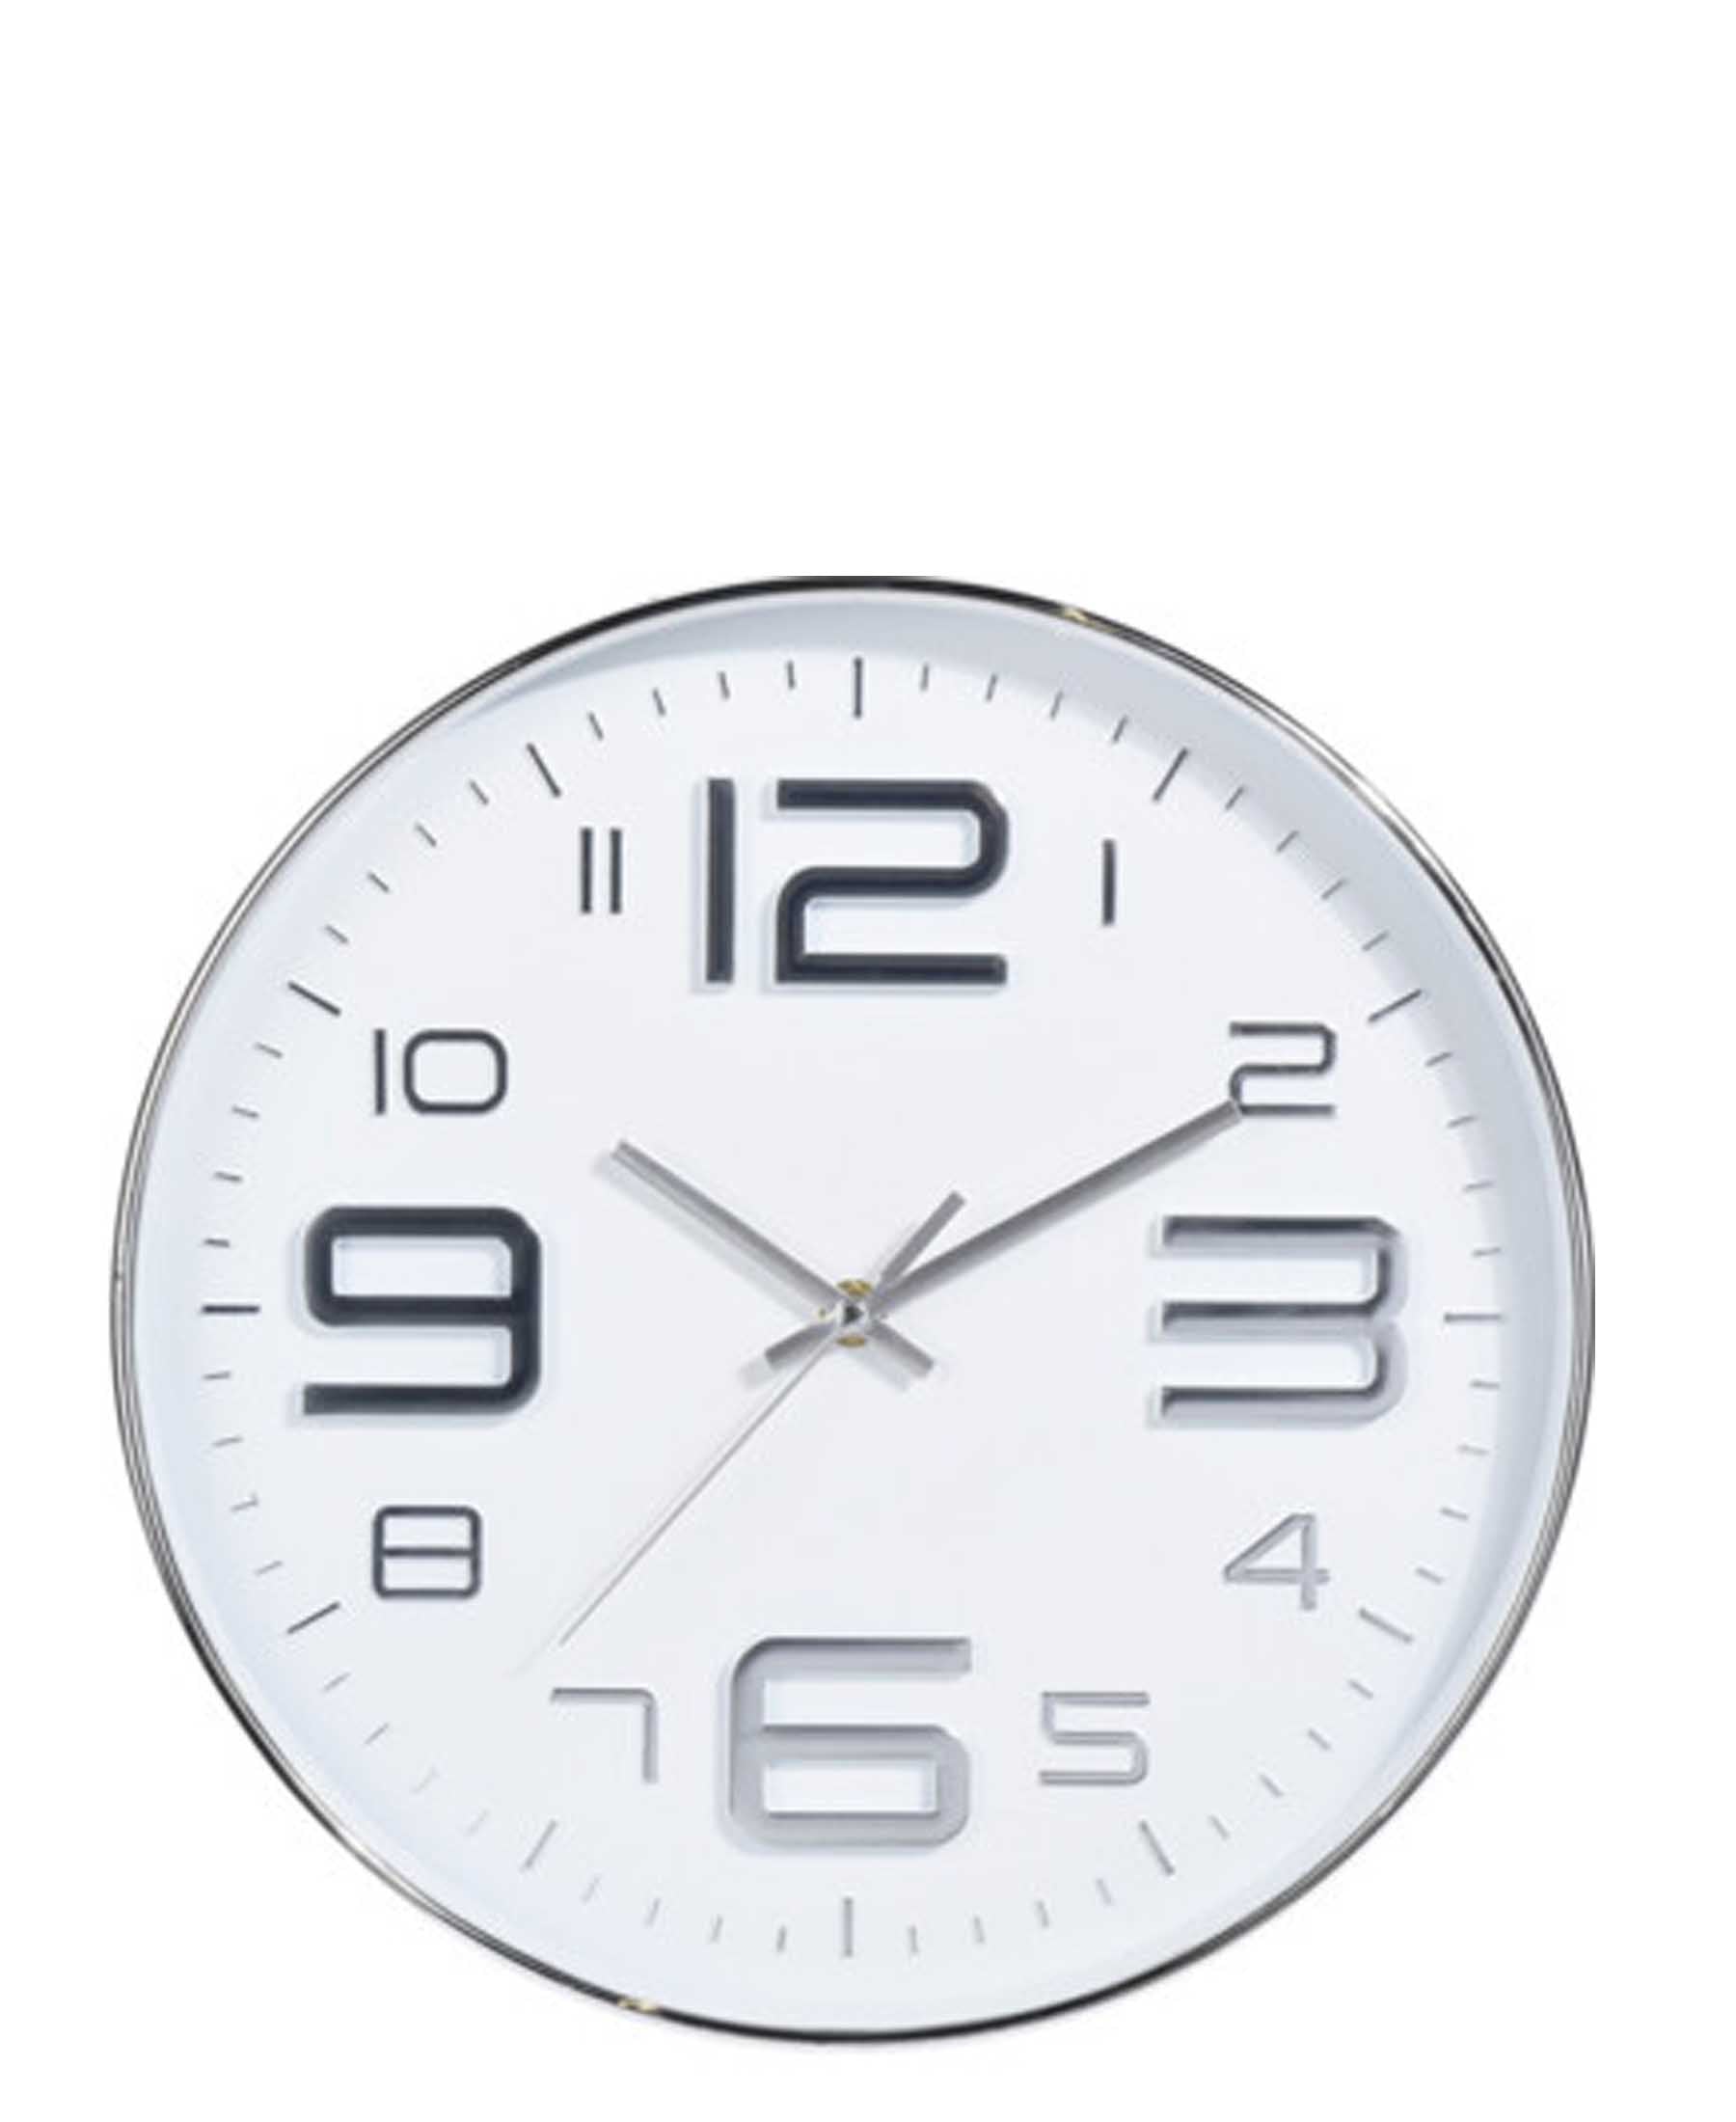 Urban Decor 30.5cm Wall Clock - White & Silver